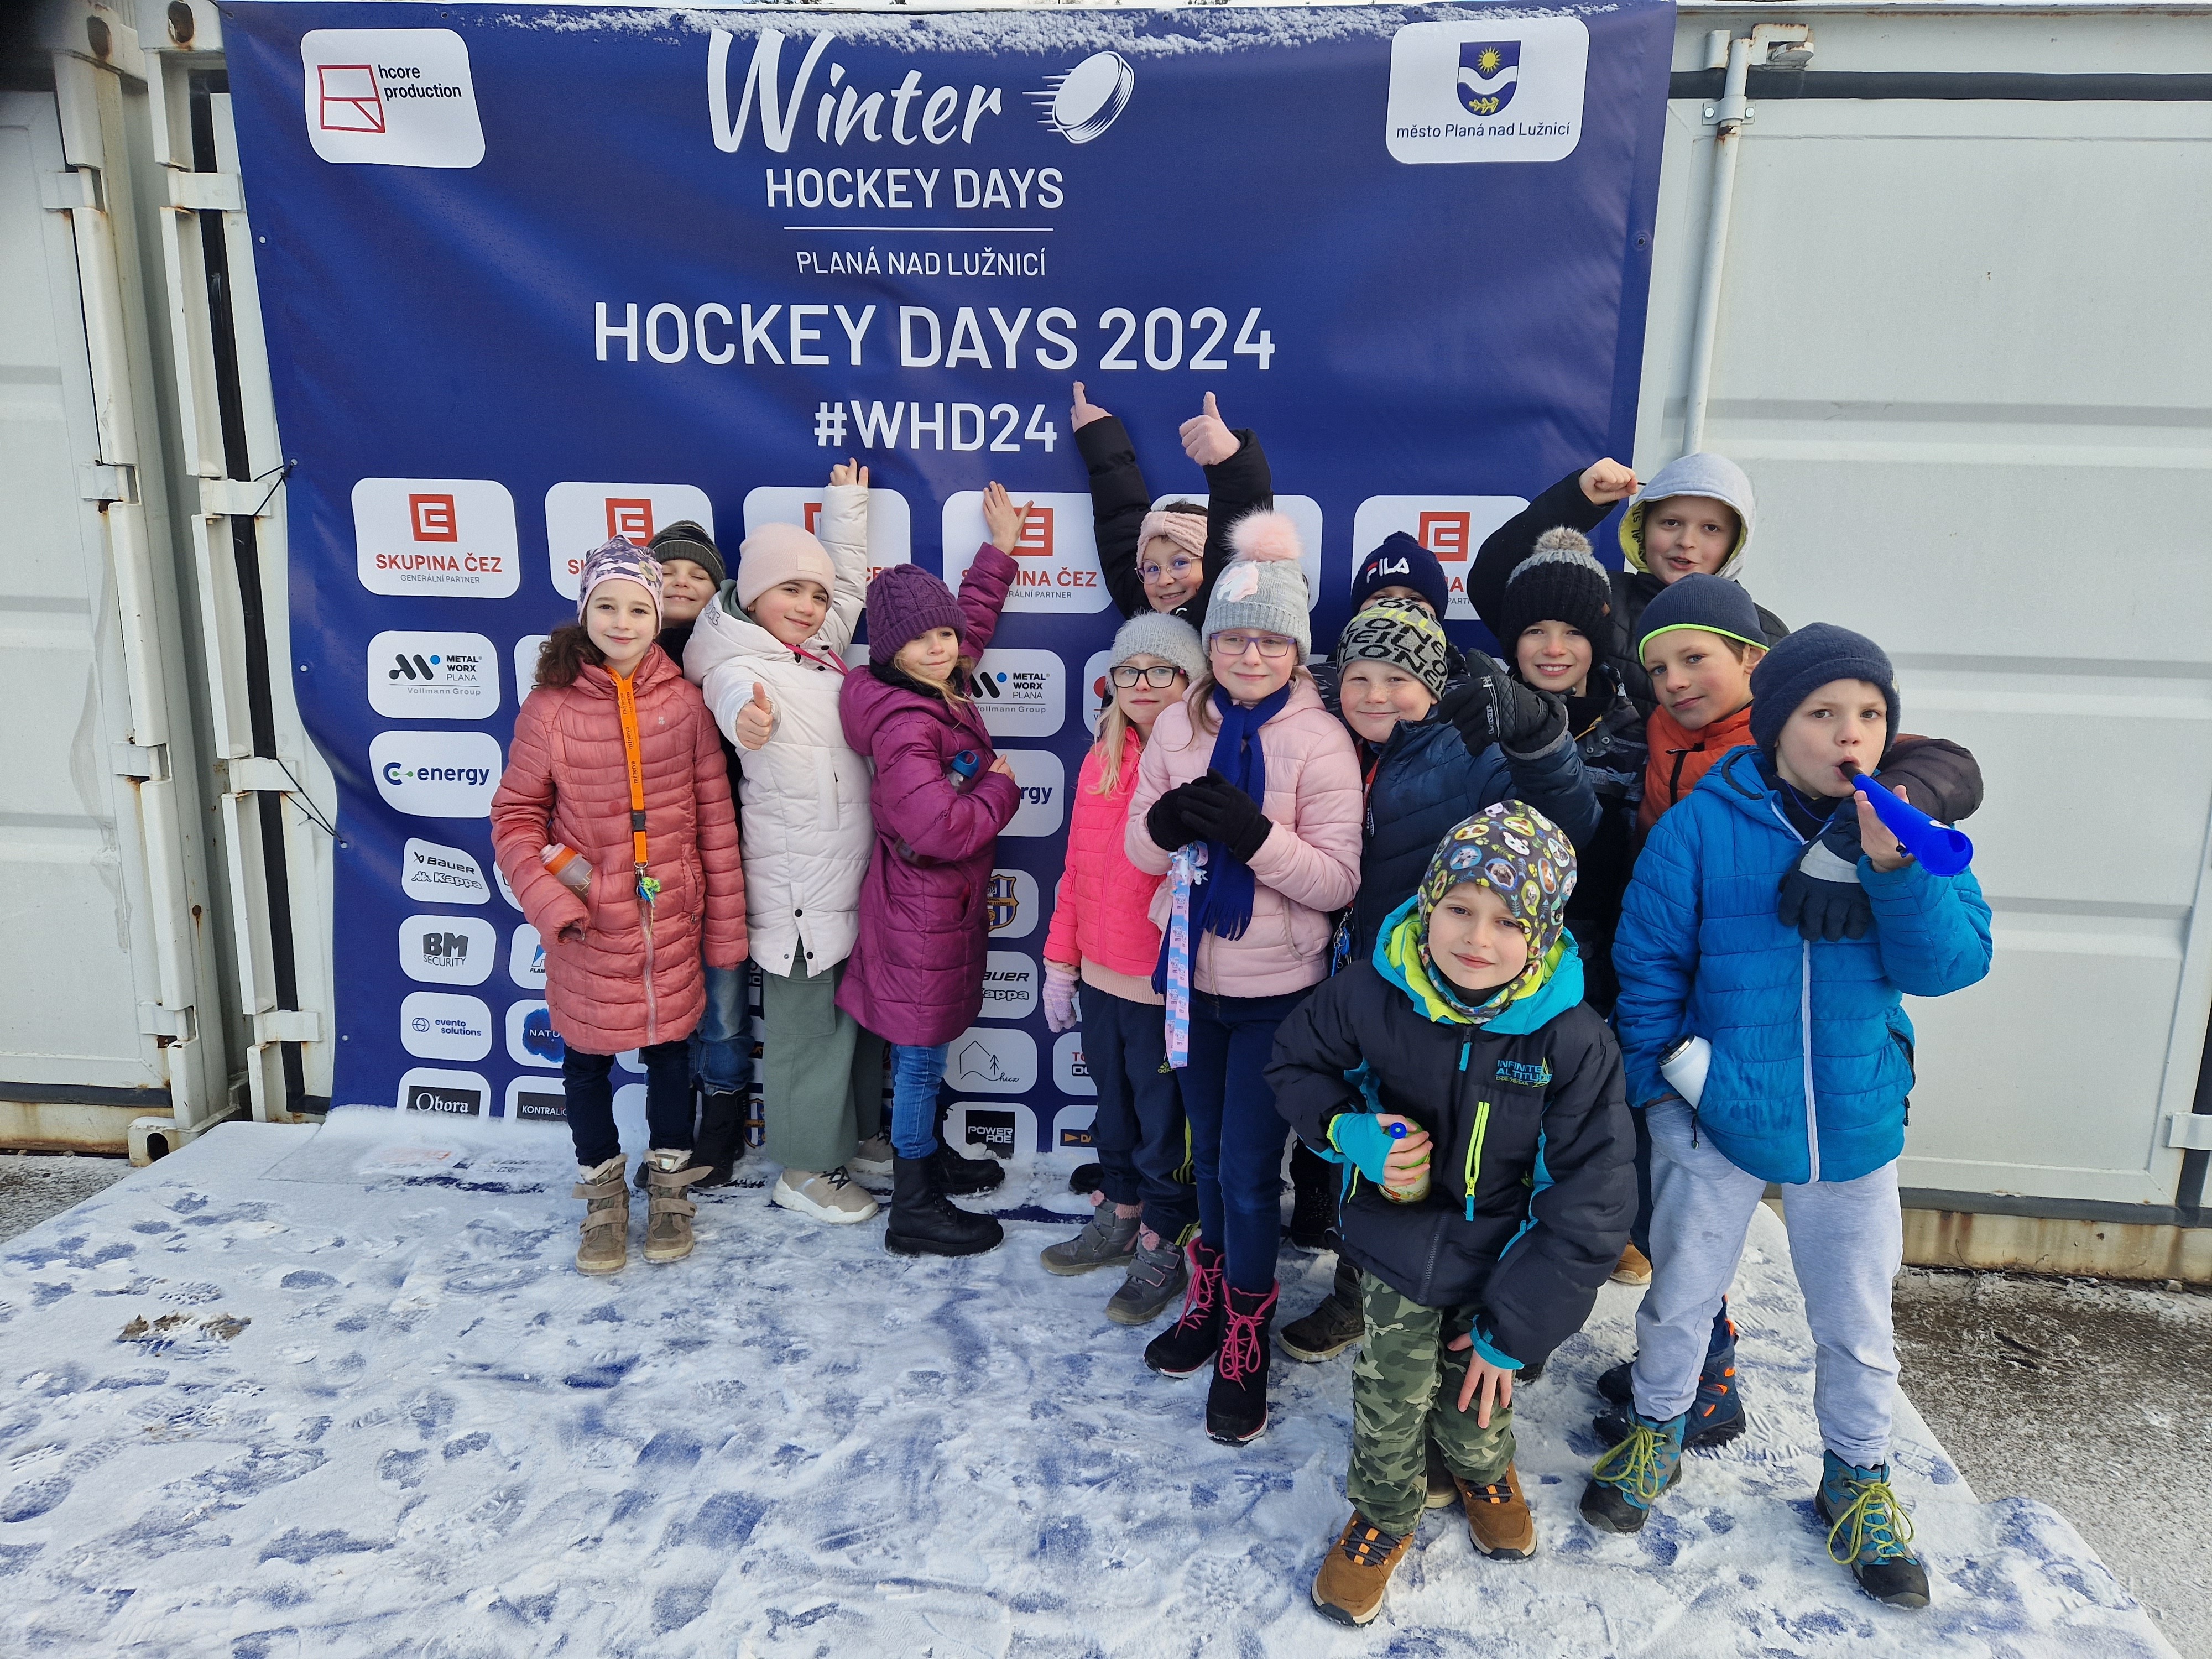 Winter Hockey Days 2024